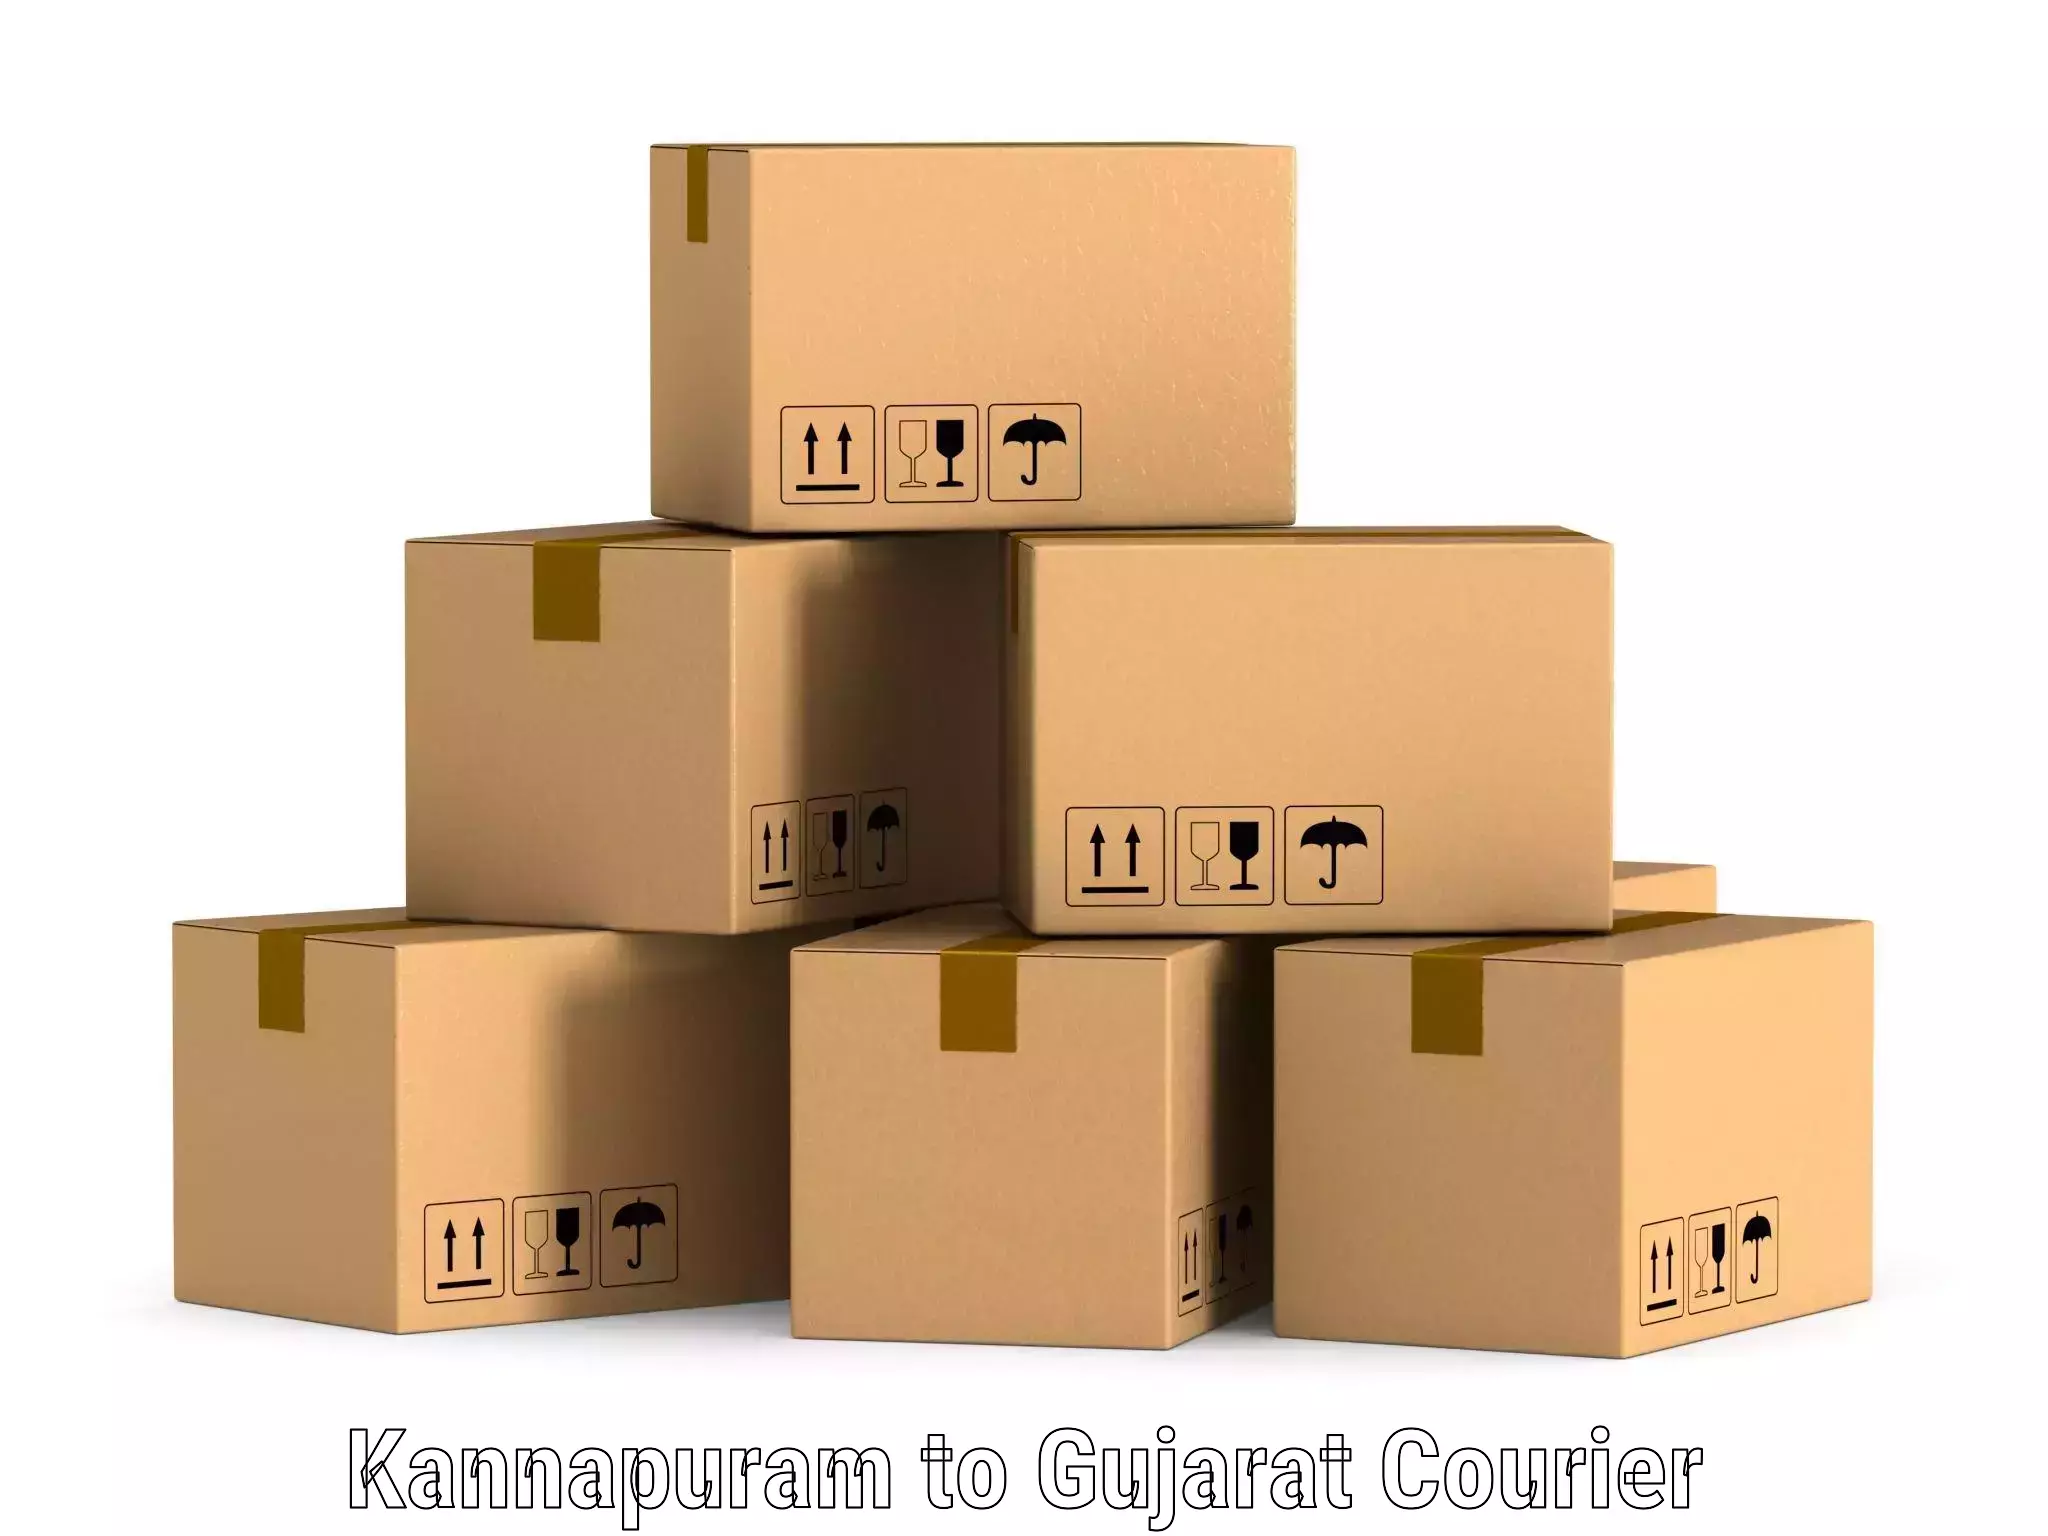 Full-service courier options Kannapuram to Halvad